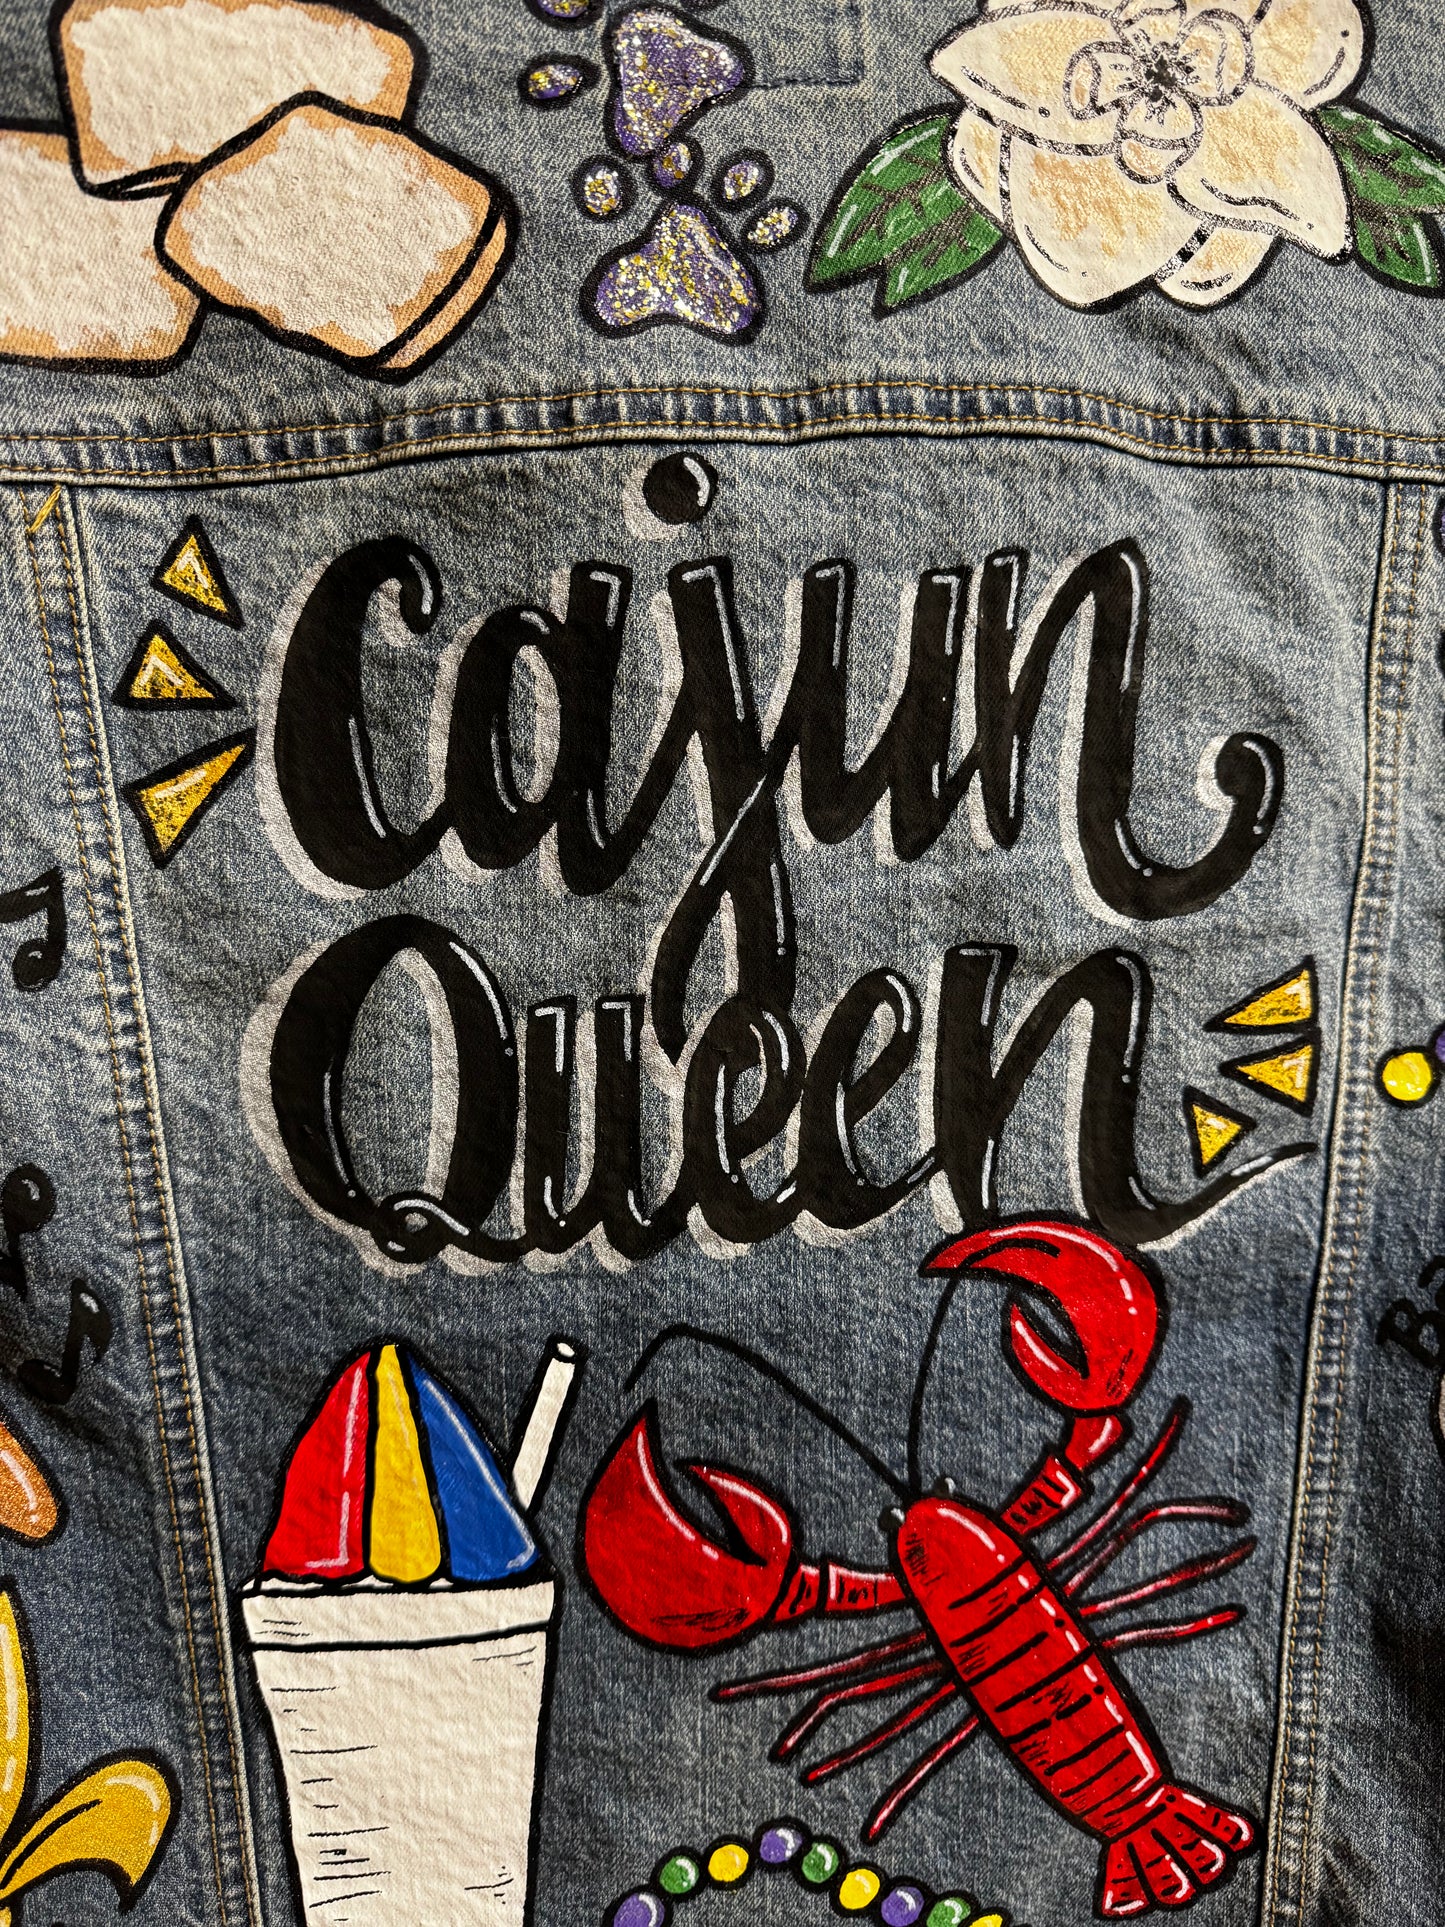 Hand Painted Jean Jacket - Cajun Queen, Crawfish, Mardi Gras, Mardi Gras Jacket, New Orleans, Purple Green Gold, Mardi Gras, Parade Outfit